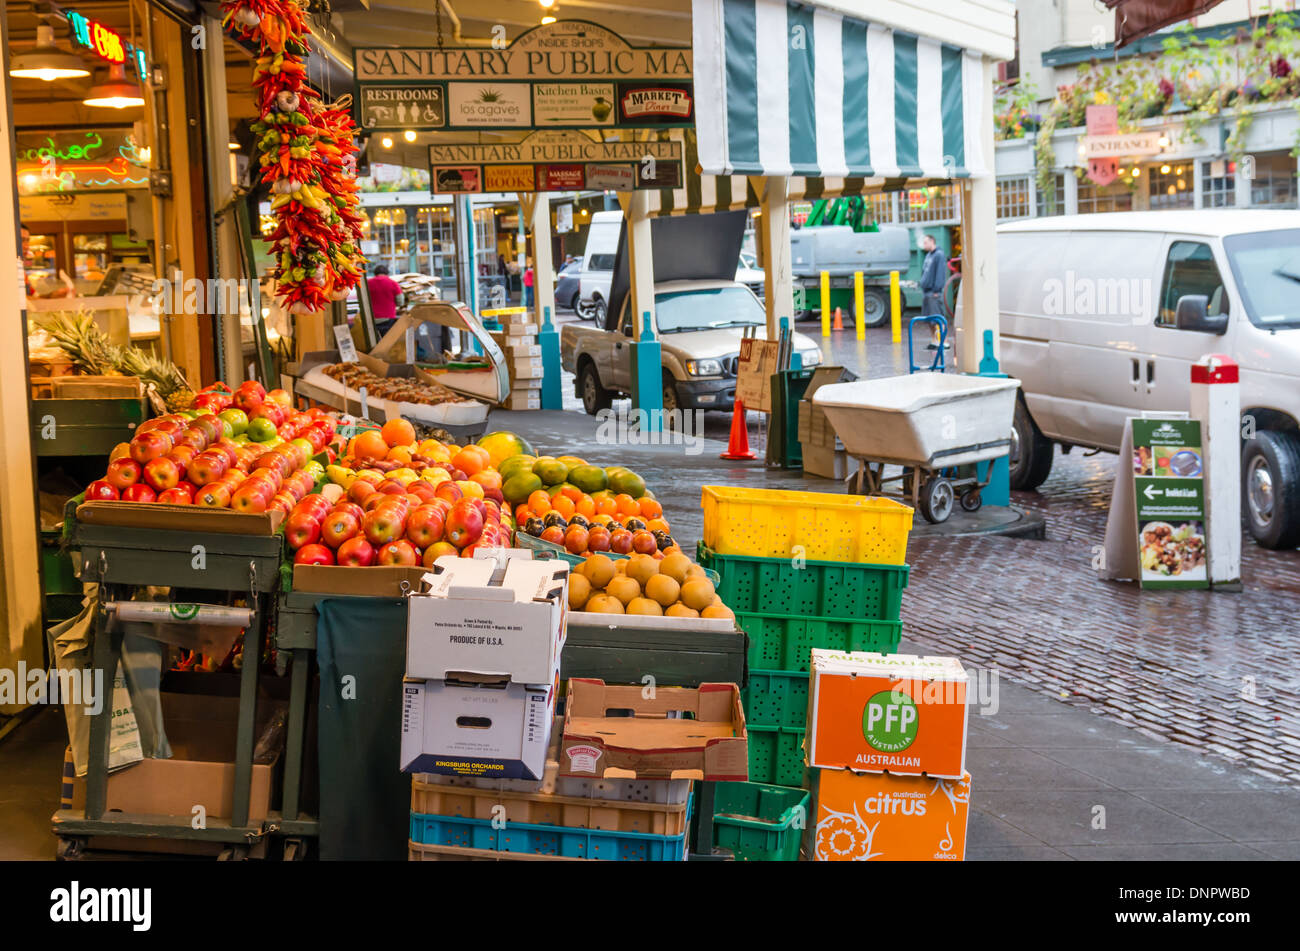 Produce vendor's market stall at the Sanitary Public Market Pike Place Market Seattle, Washington, USA Stock Photo